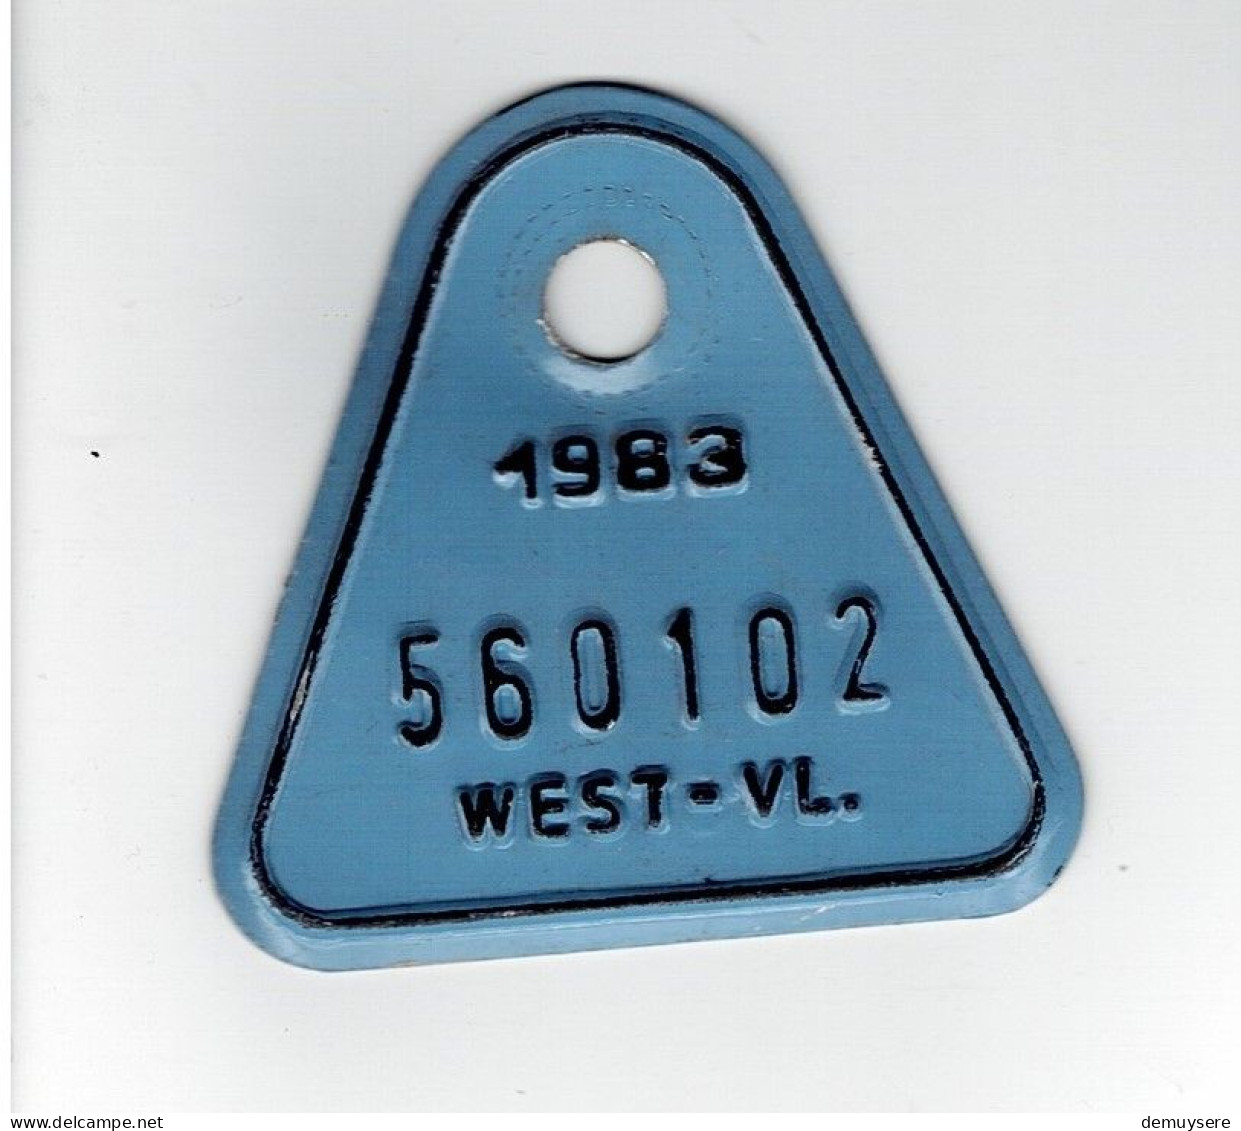 LADE D - FIETSPLAAT - 1983  -  WEST-VL - 560102 - Plaques D'immatriculation